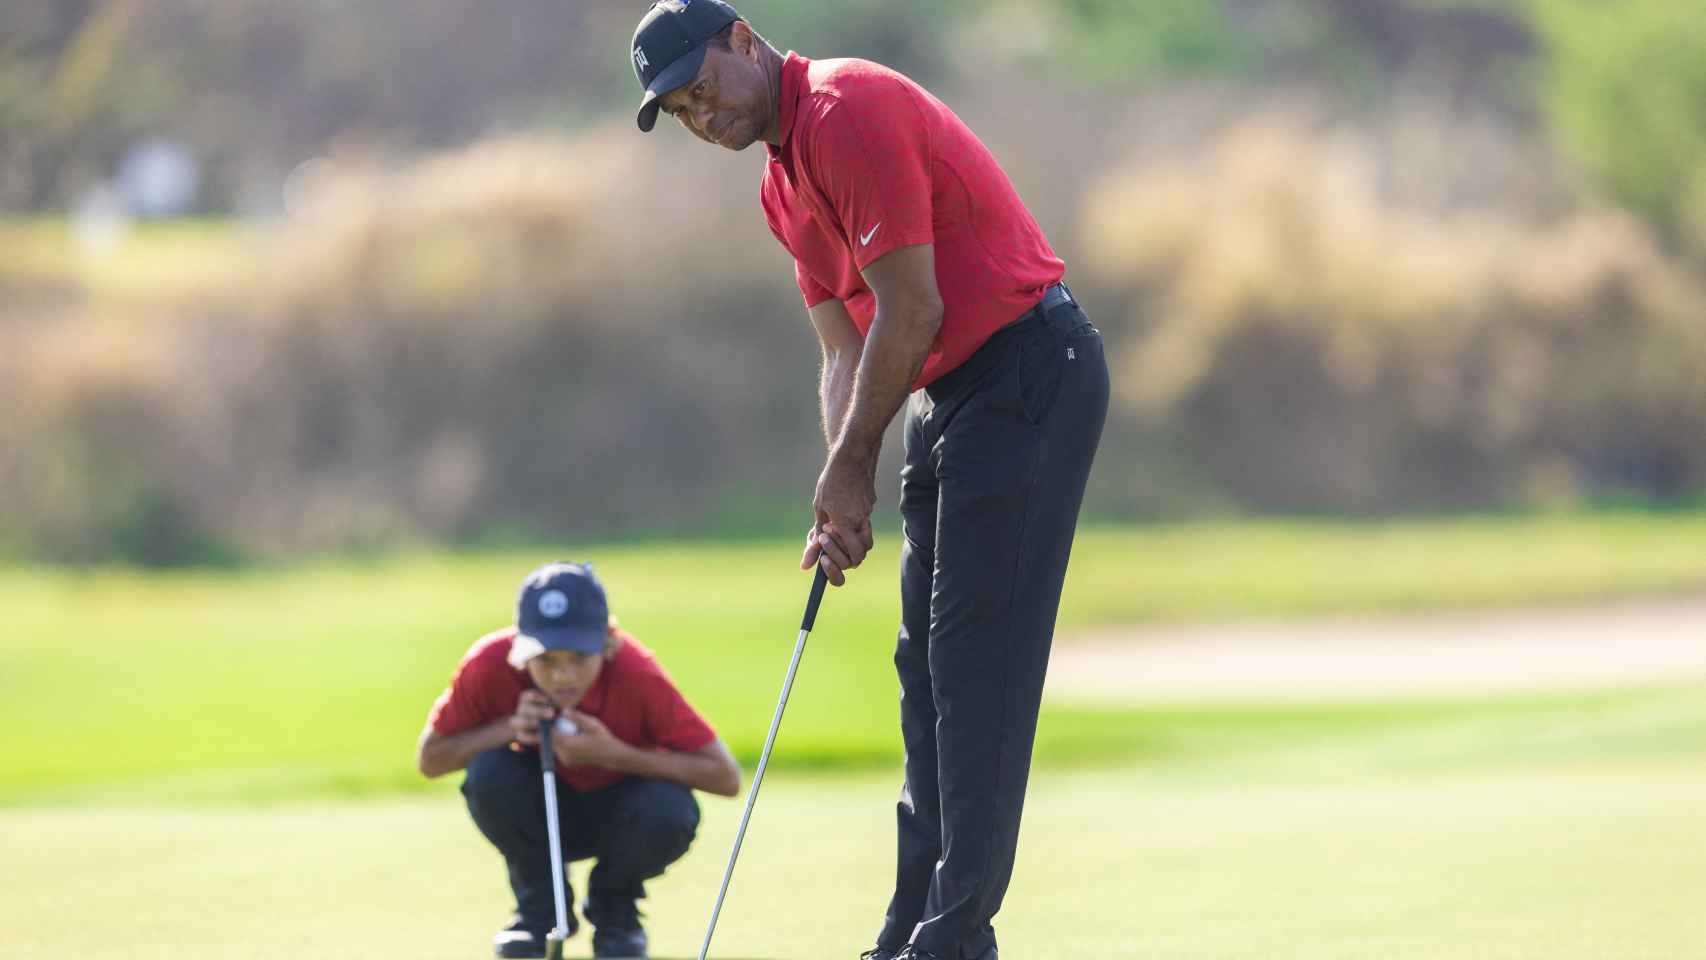 Charlie y Tiger Woods, durante el torneo PNC Championship 2021 de golf